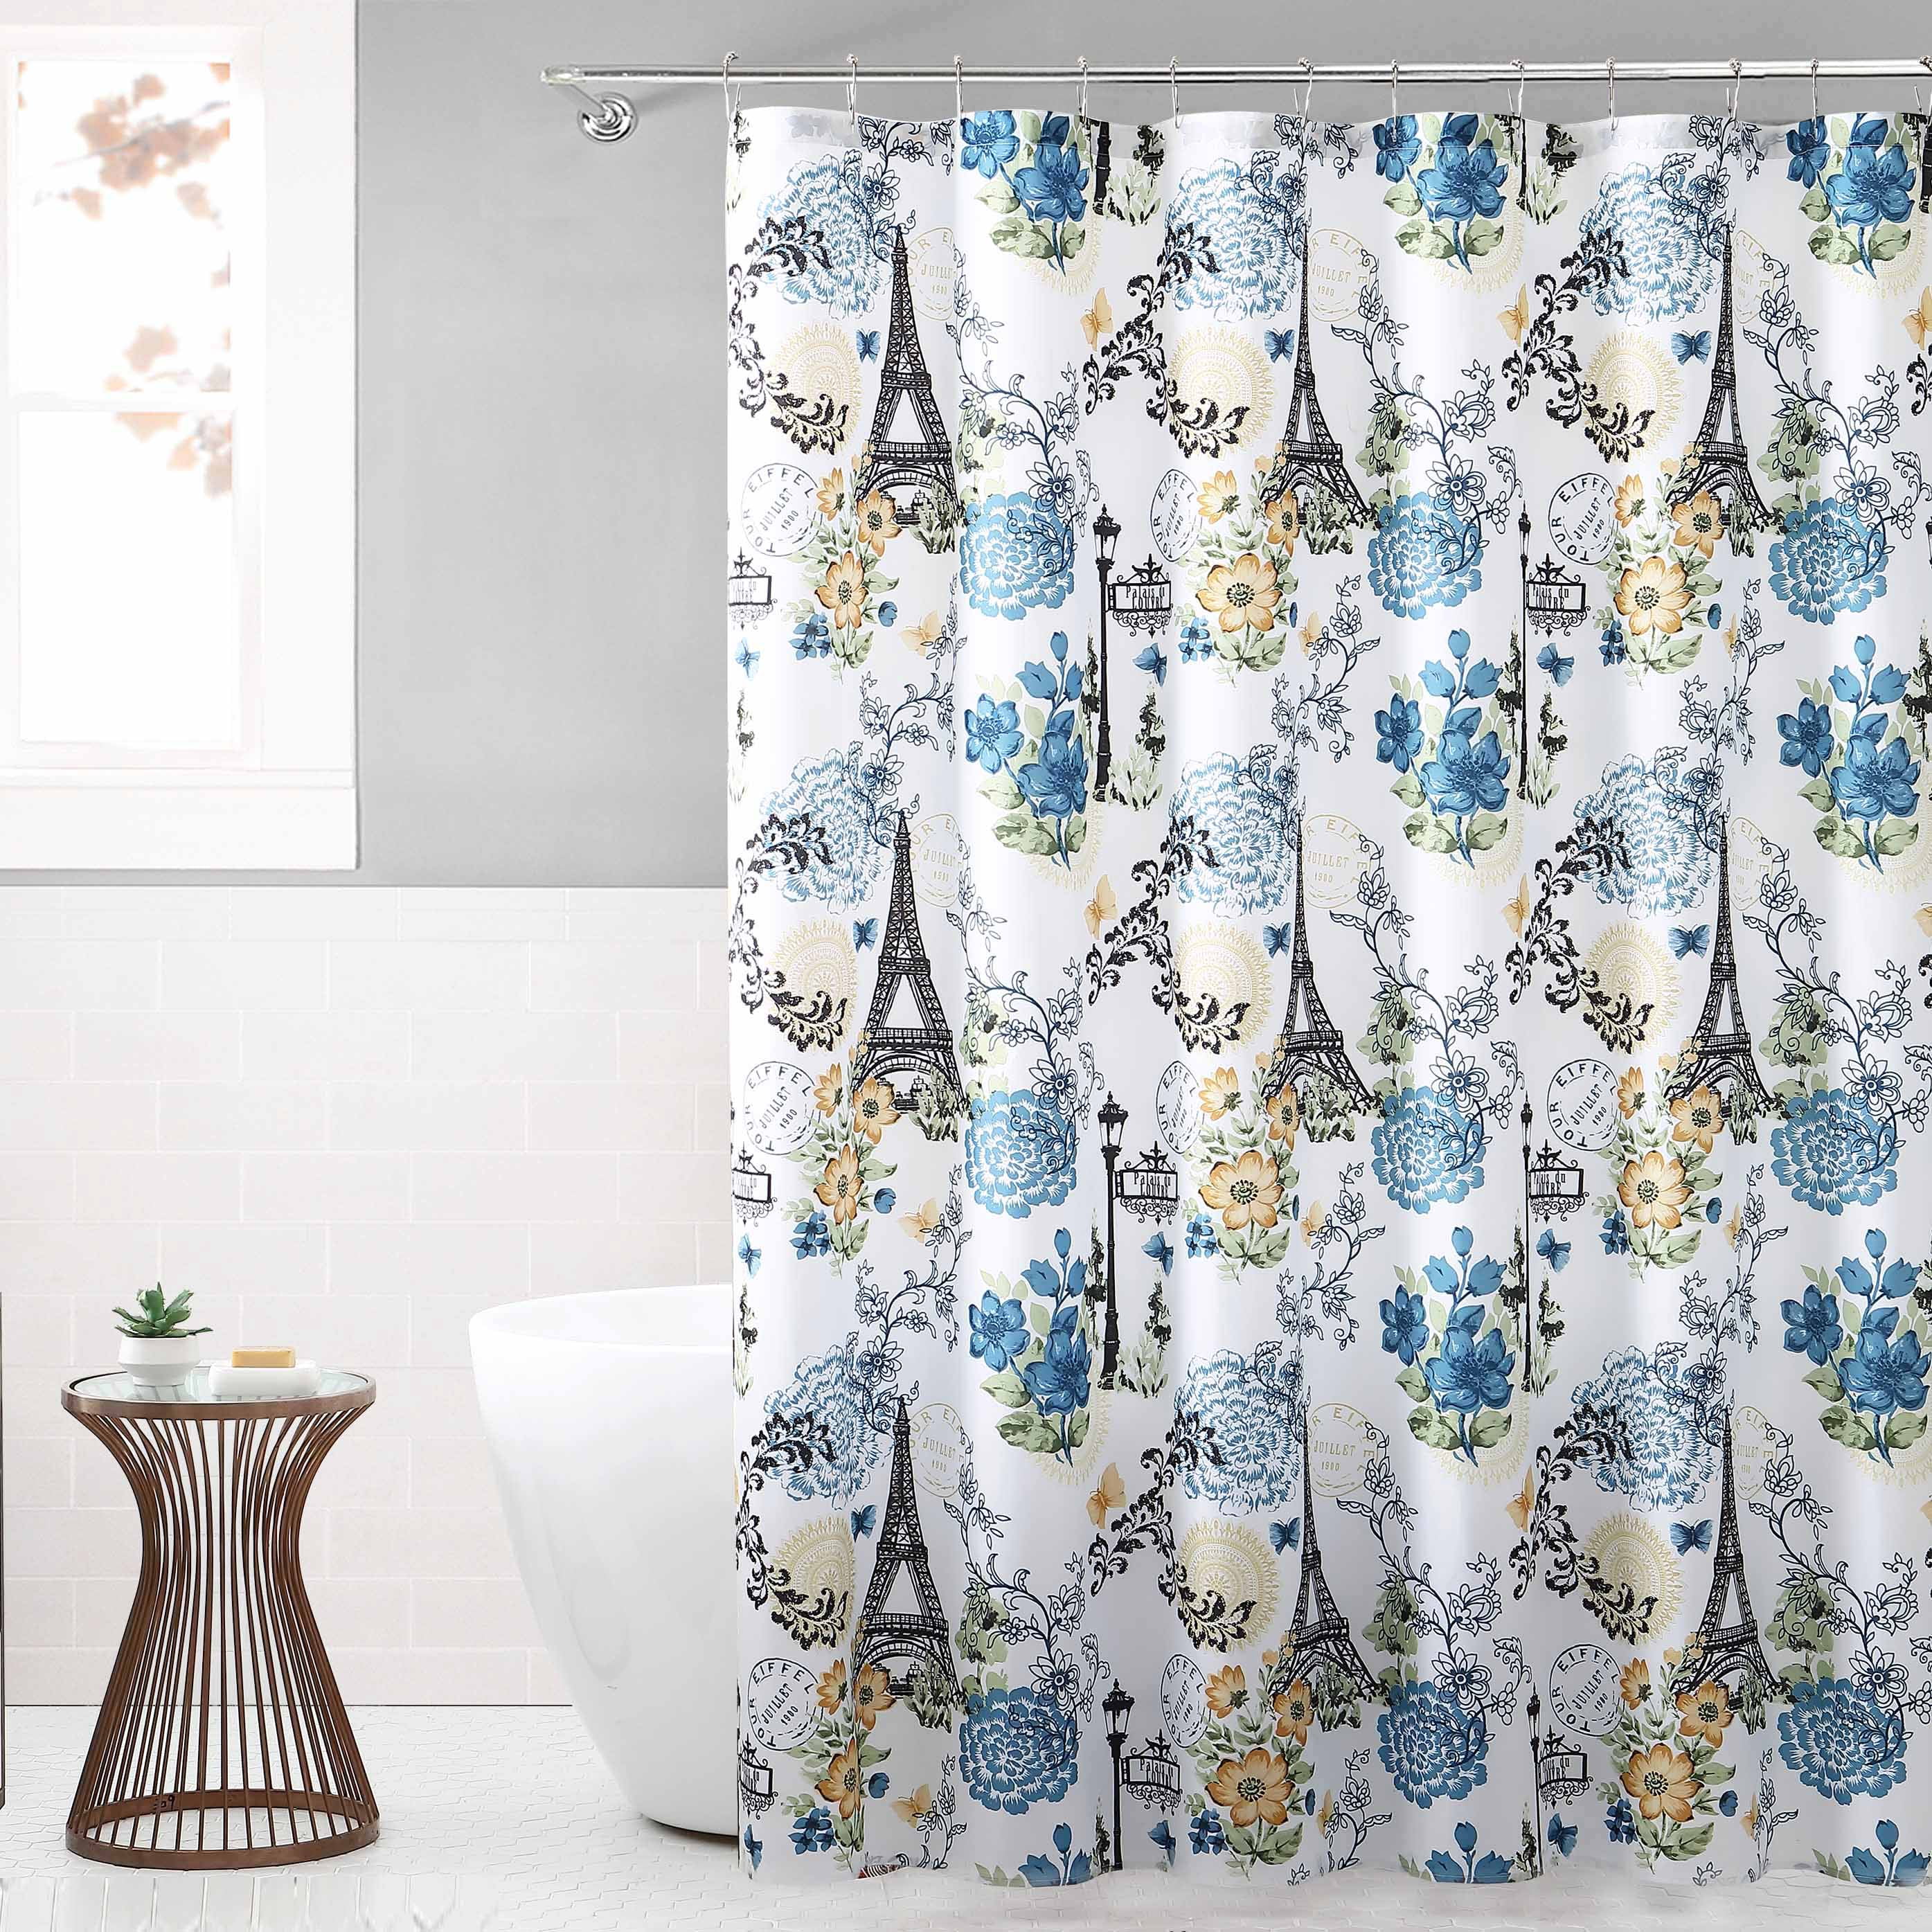 Flying Umbrella Paris Fabric Shower Curtain Polyester Set for Bathroom Decor MAt 